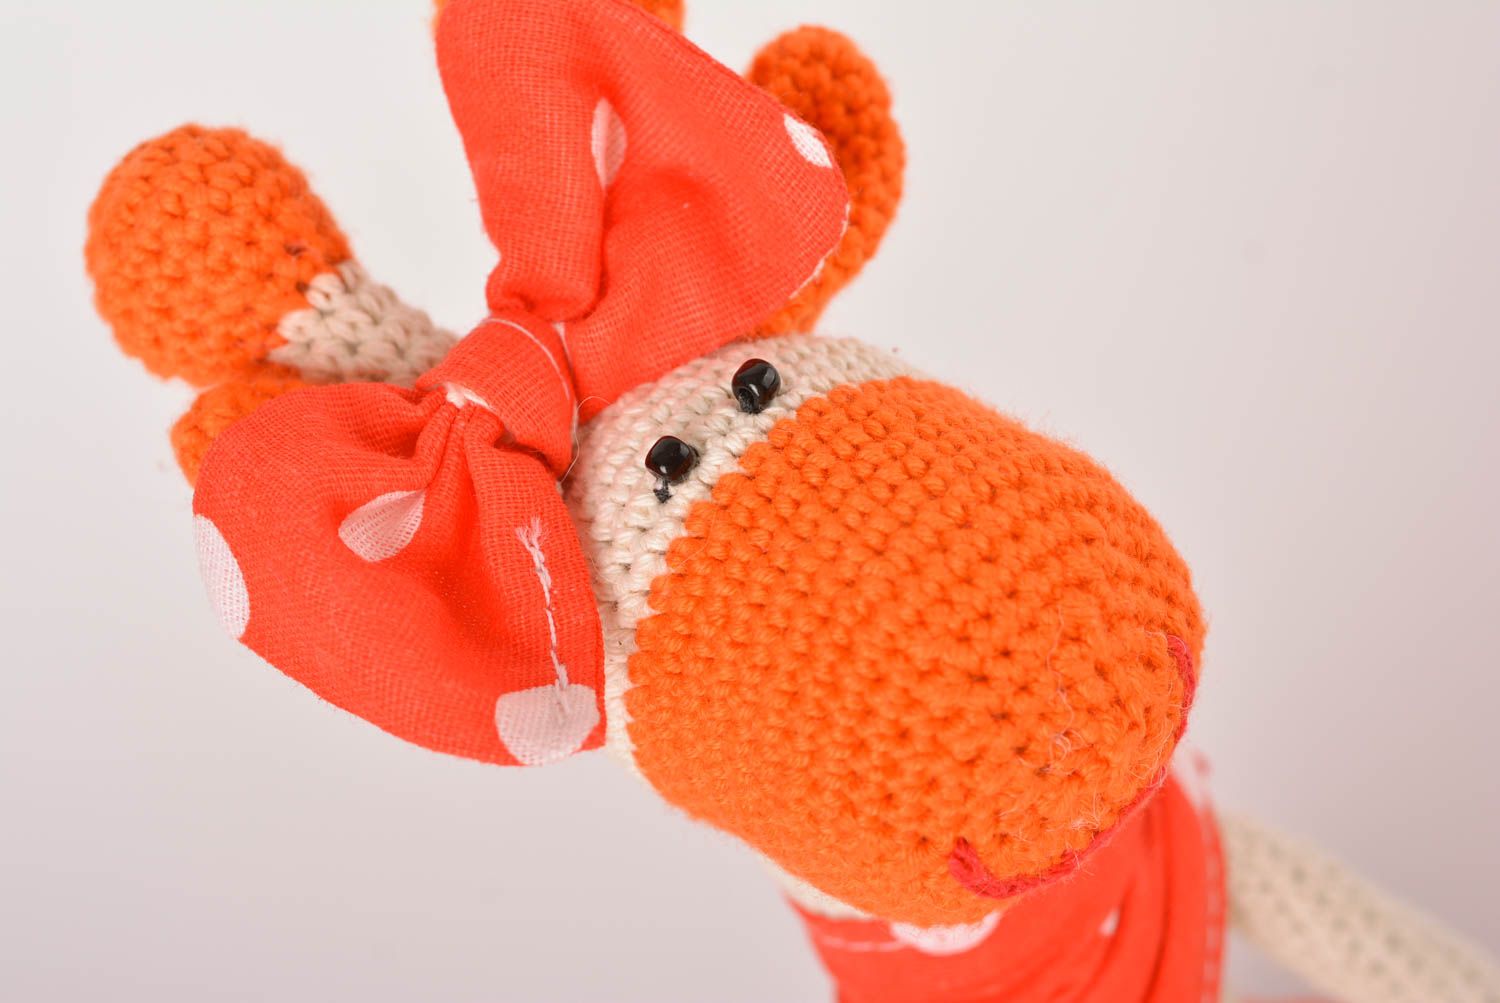 Juguete de peluche hecho a mano muñeco tejido a crochet regalo original foto 2